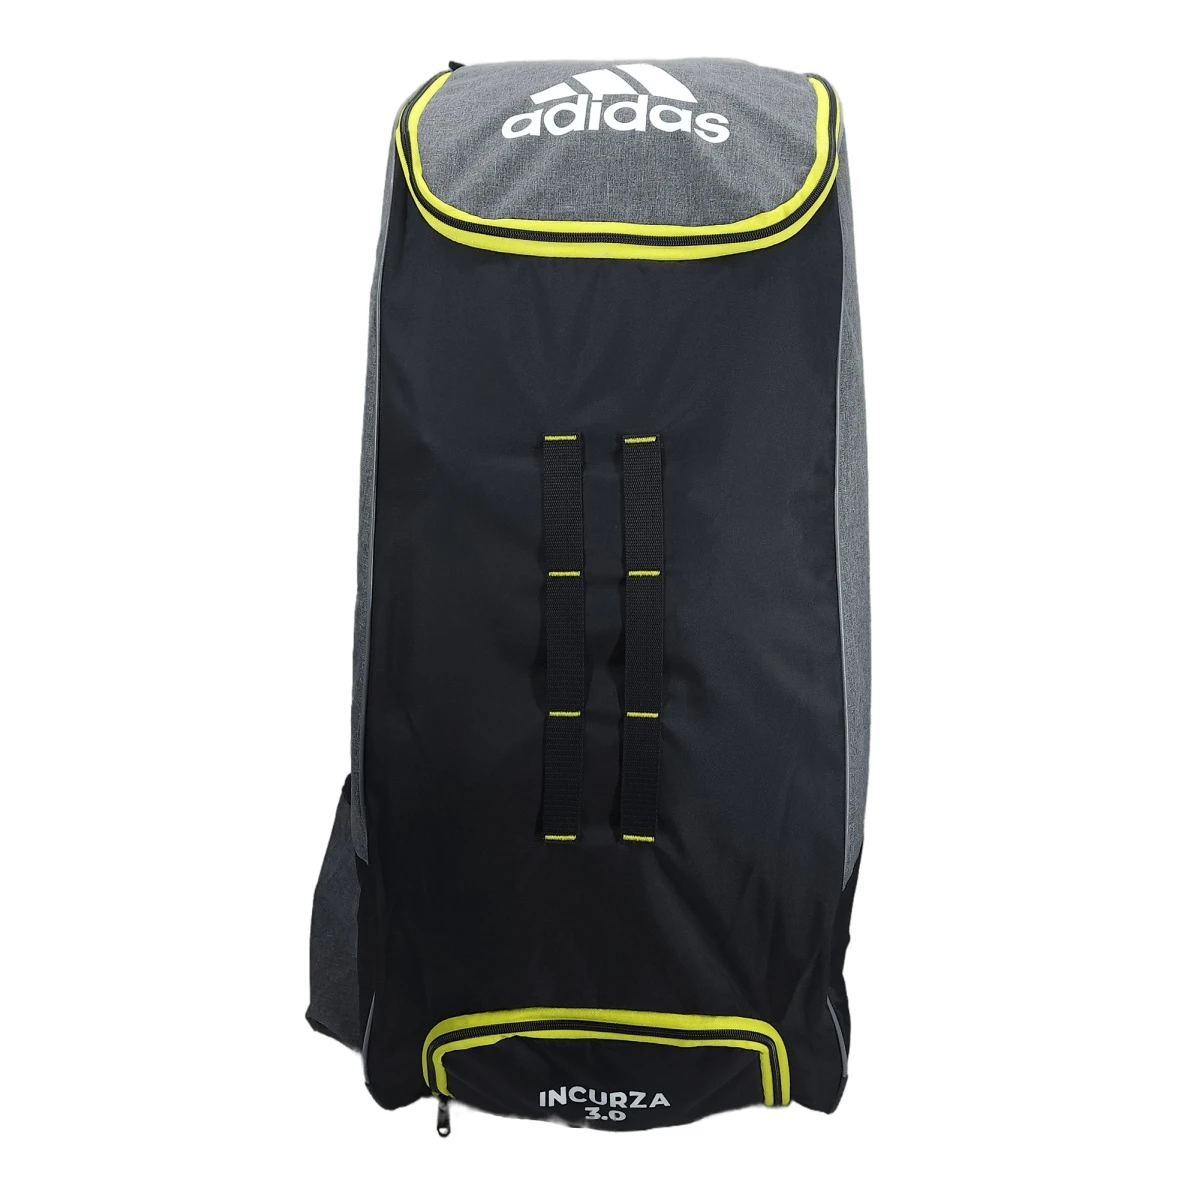 Newbery SPS LE Cricket Kit Bag - Wheelie Duffle - Large - YouTube